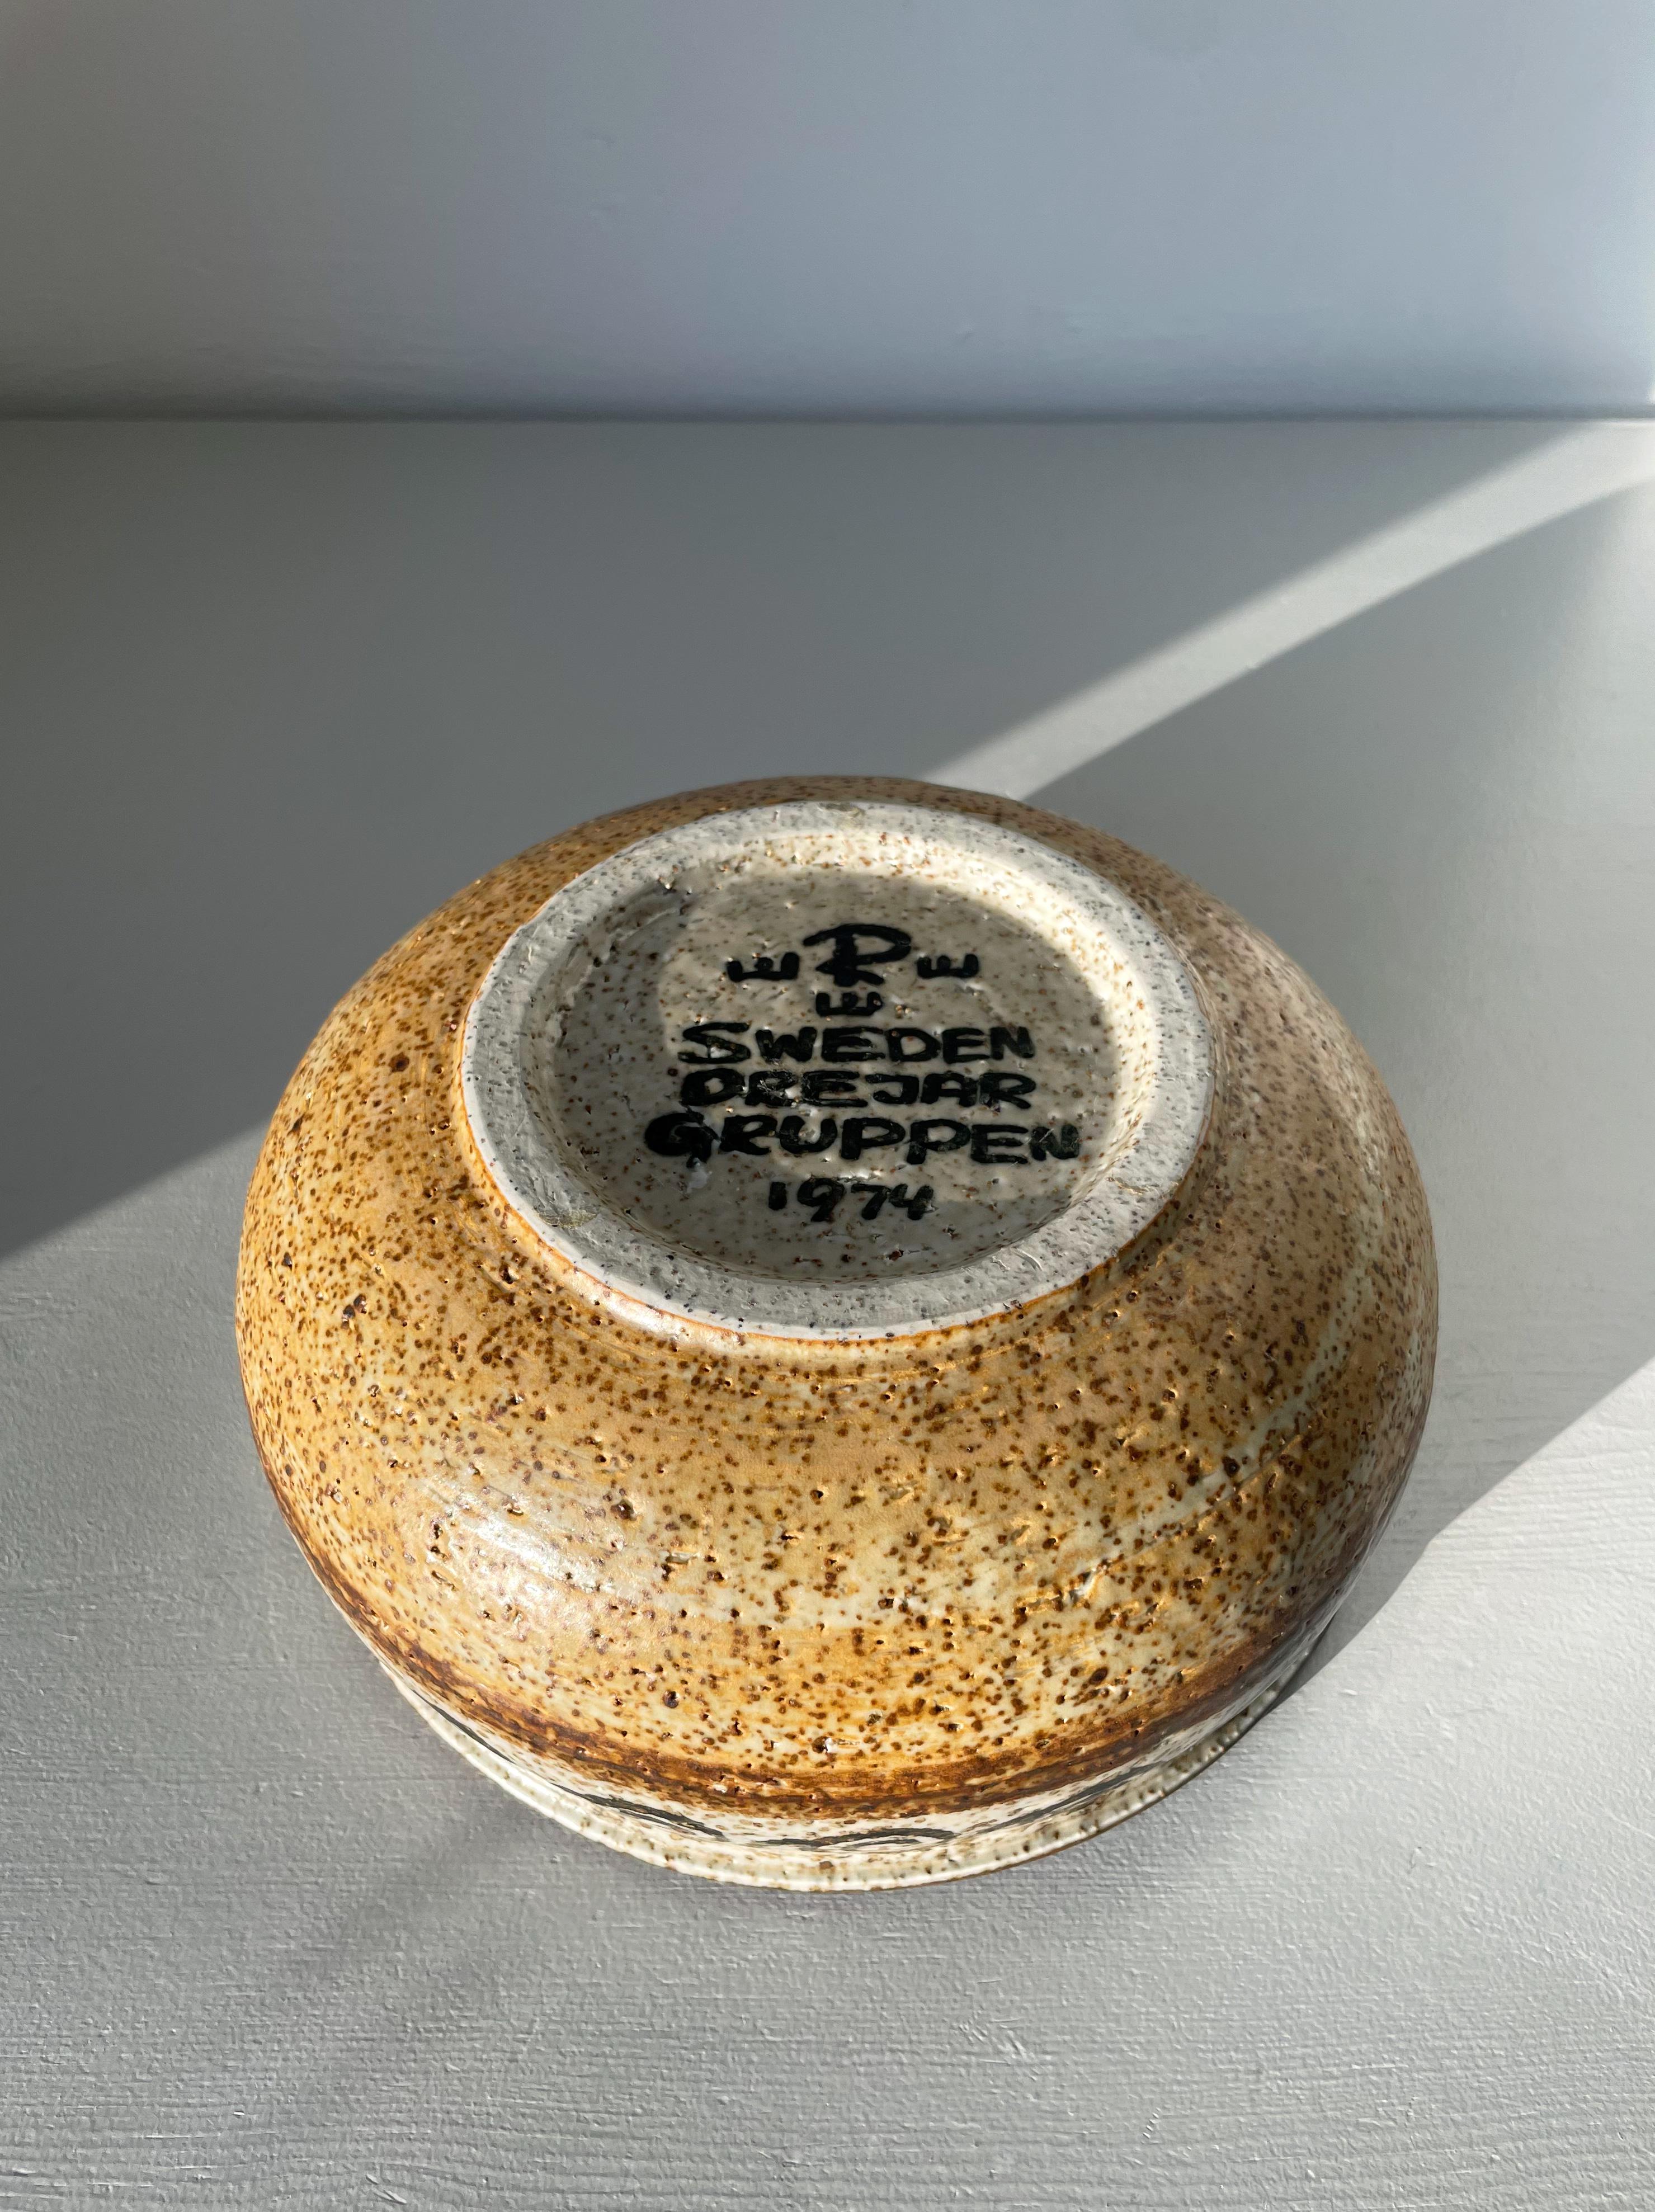 Rörstrand Drejargruppen Dekorative Schale aus Keramik, 1974 (20. Jahrhundert) im Angebot